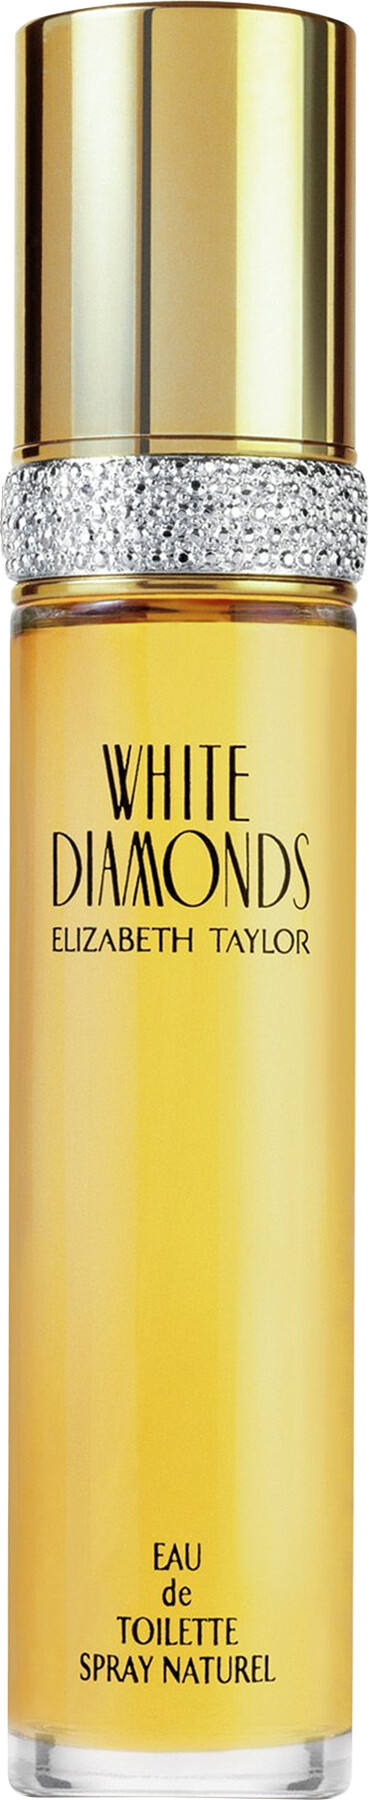 Elizabeth Taylor White Diamonds Eau de Toilette Spray 30ml